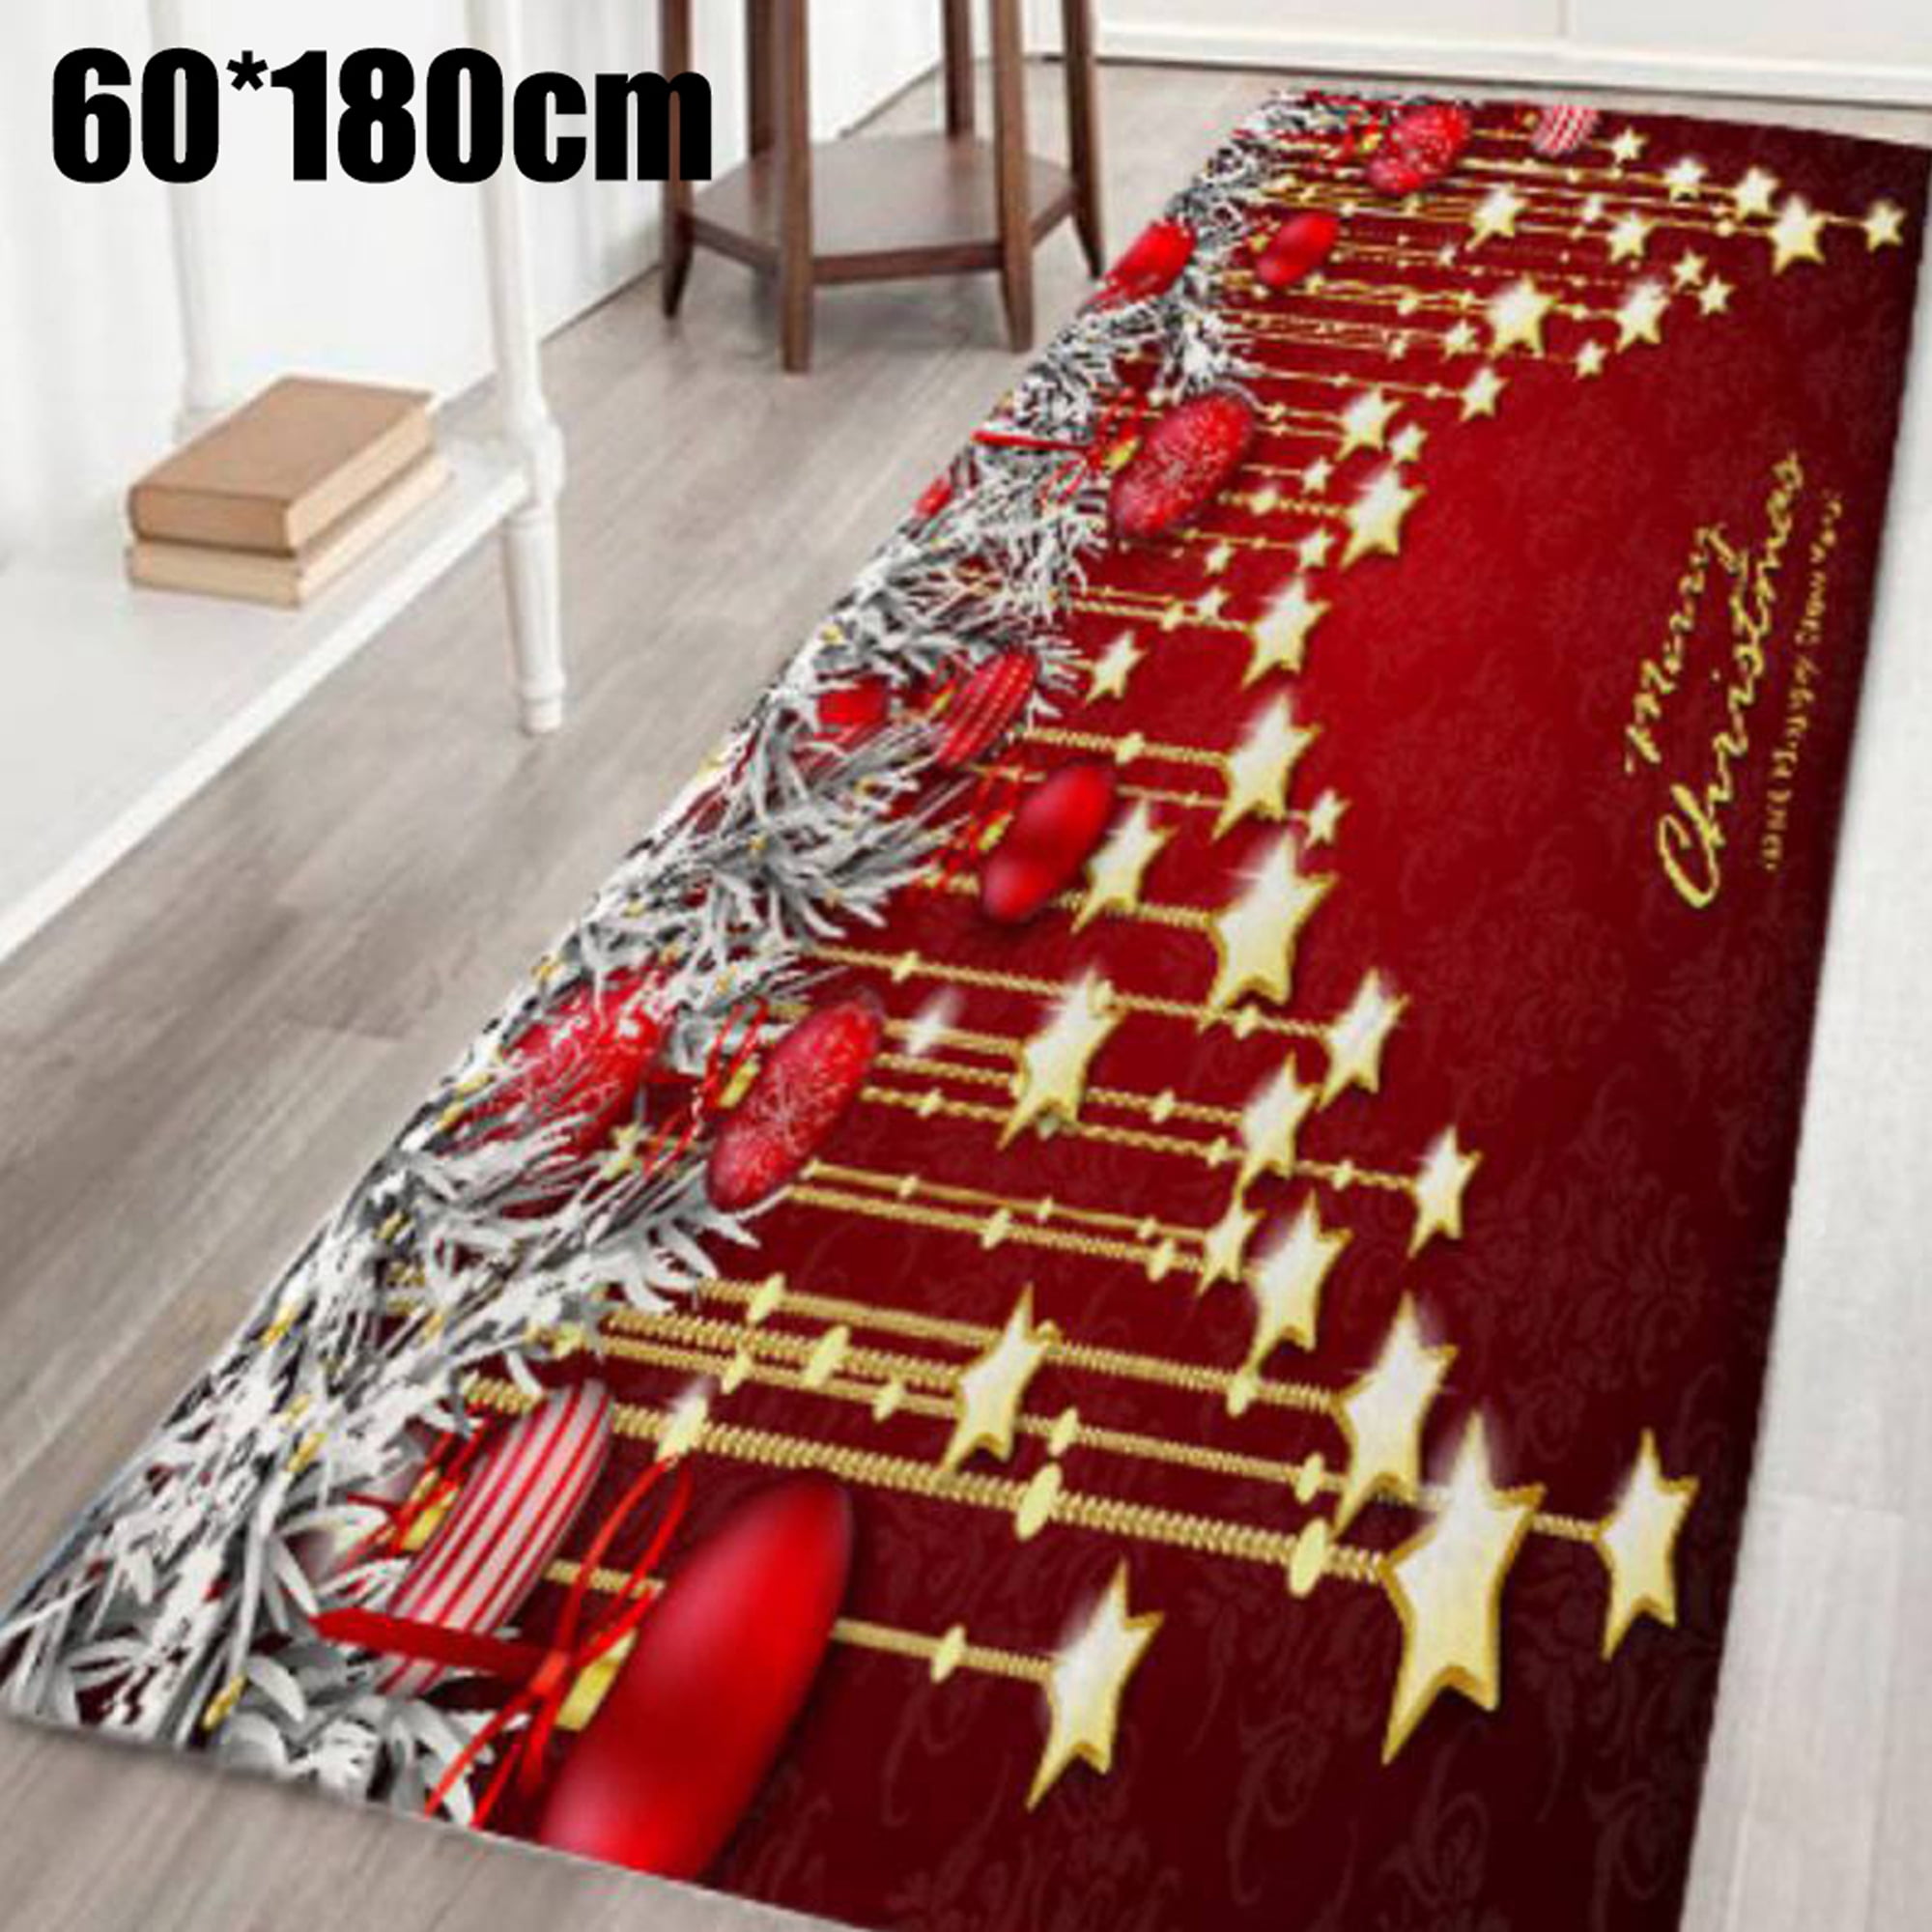 Christmas Santa Claus Pattern Anti-slip Kitchen Bathroom Room Floor Mat Carpet 